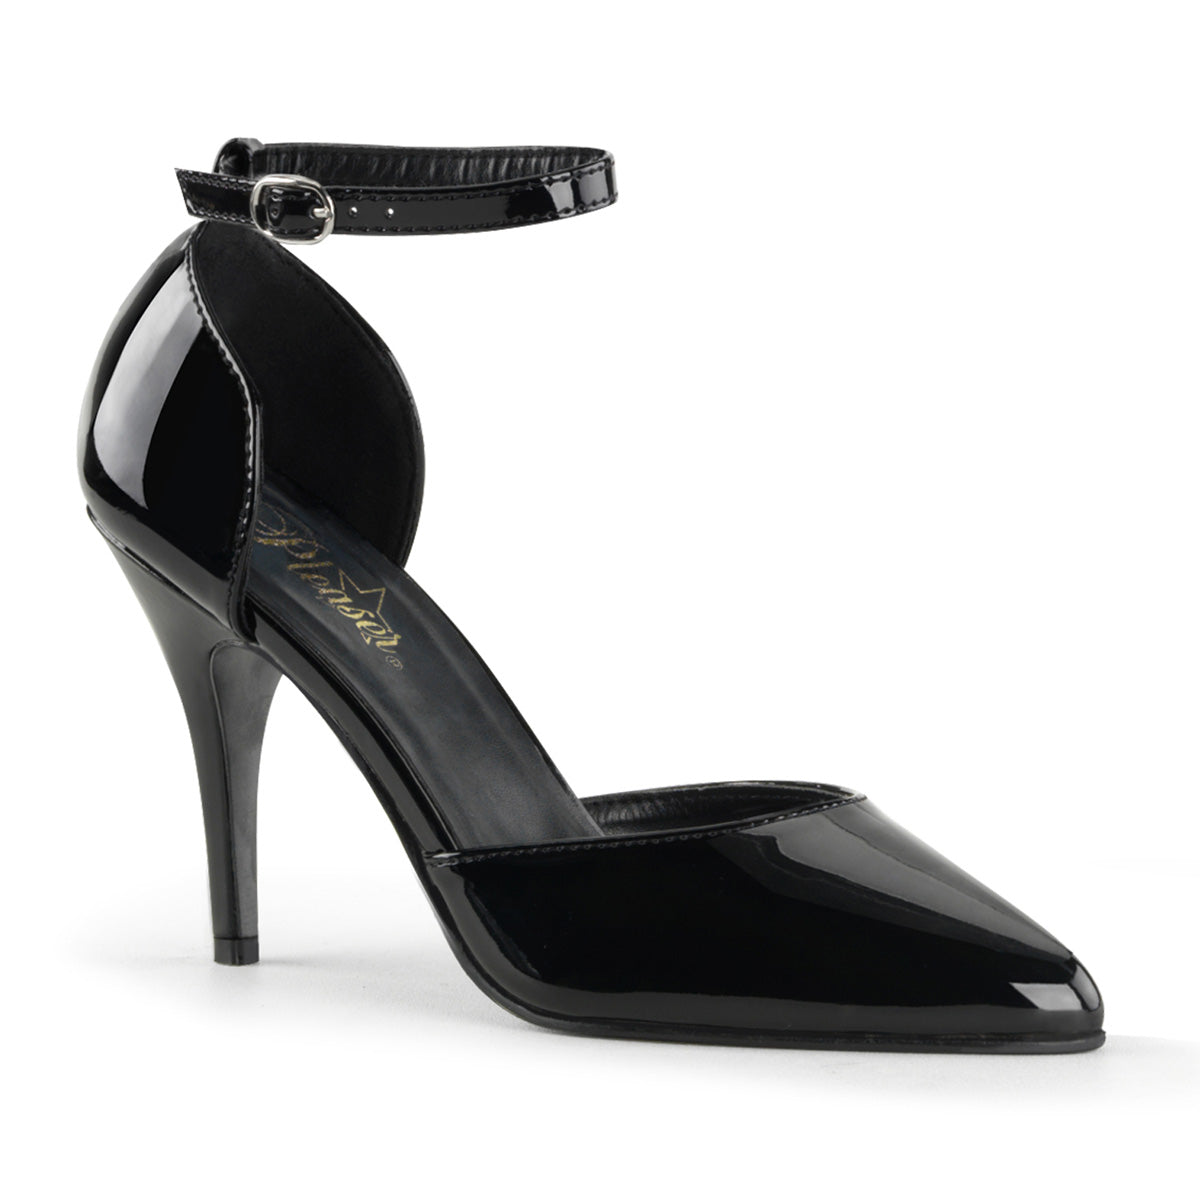 VANITY-402 Pleaser Shoe 4" Heel Black Patent Fetish Footwear-Pleaser- Sexy Shoes